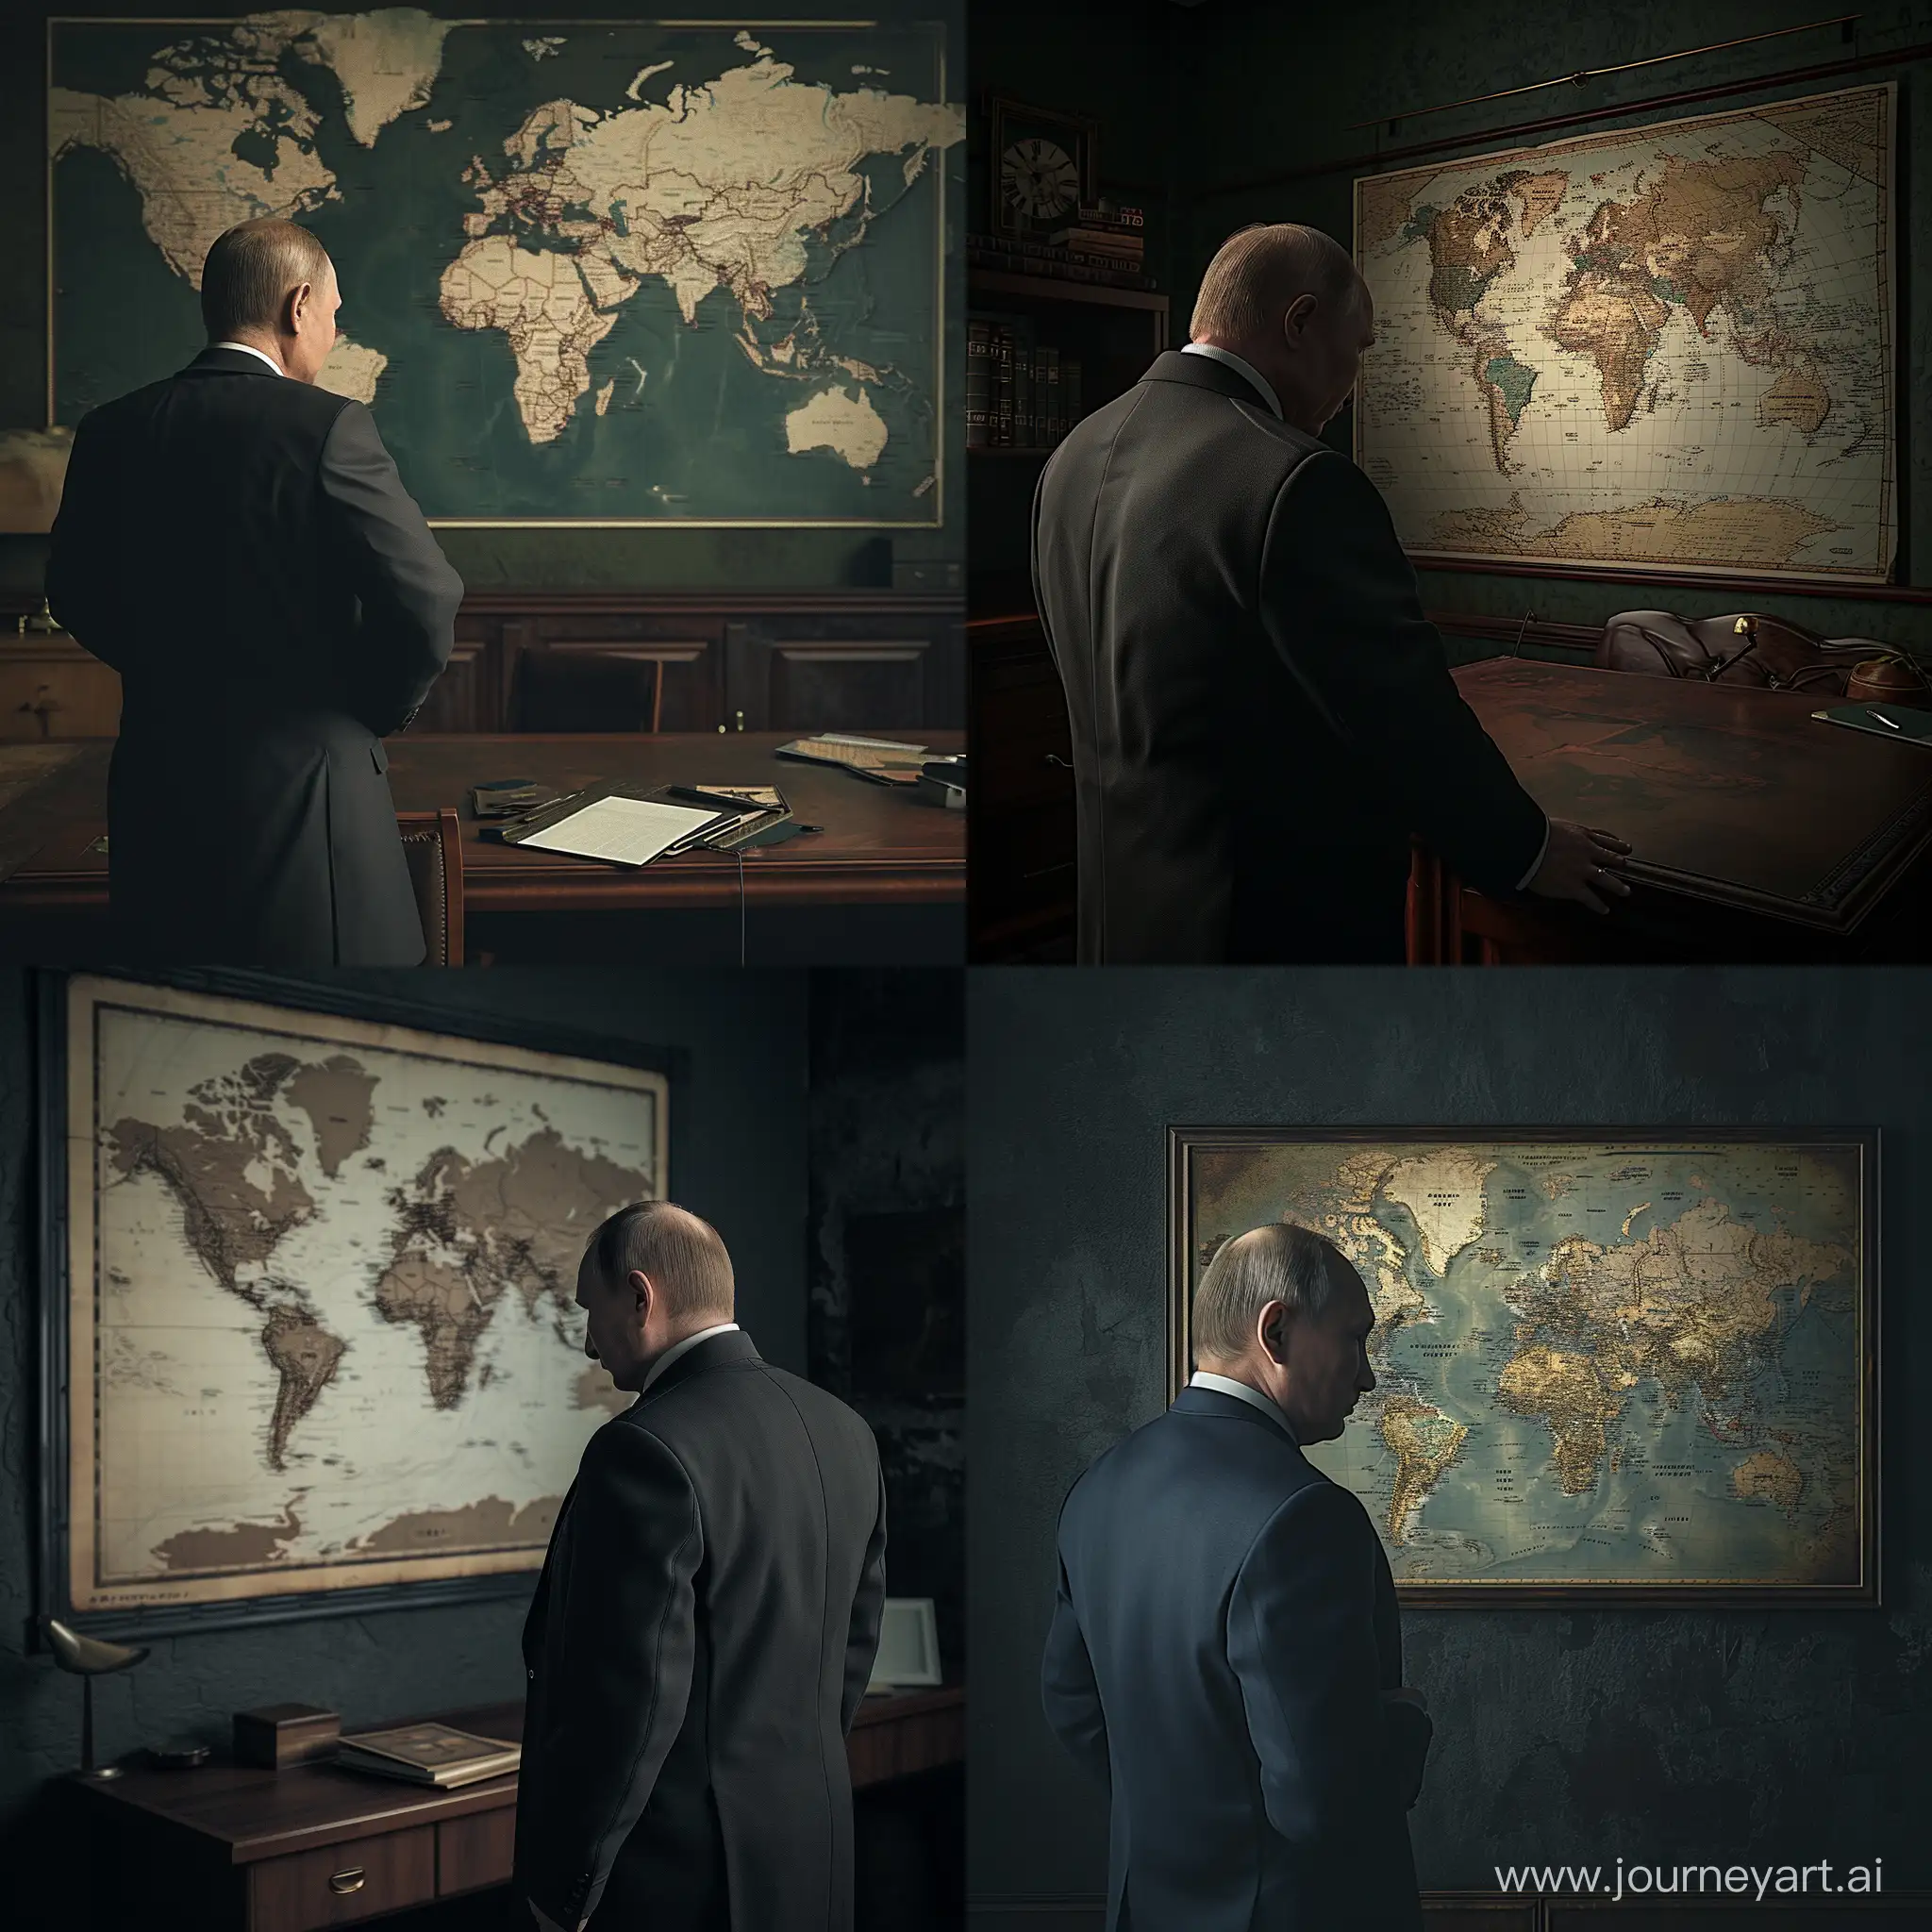 Vladimir-Putin-Examines-World-Map-in-RetroStyle-Office